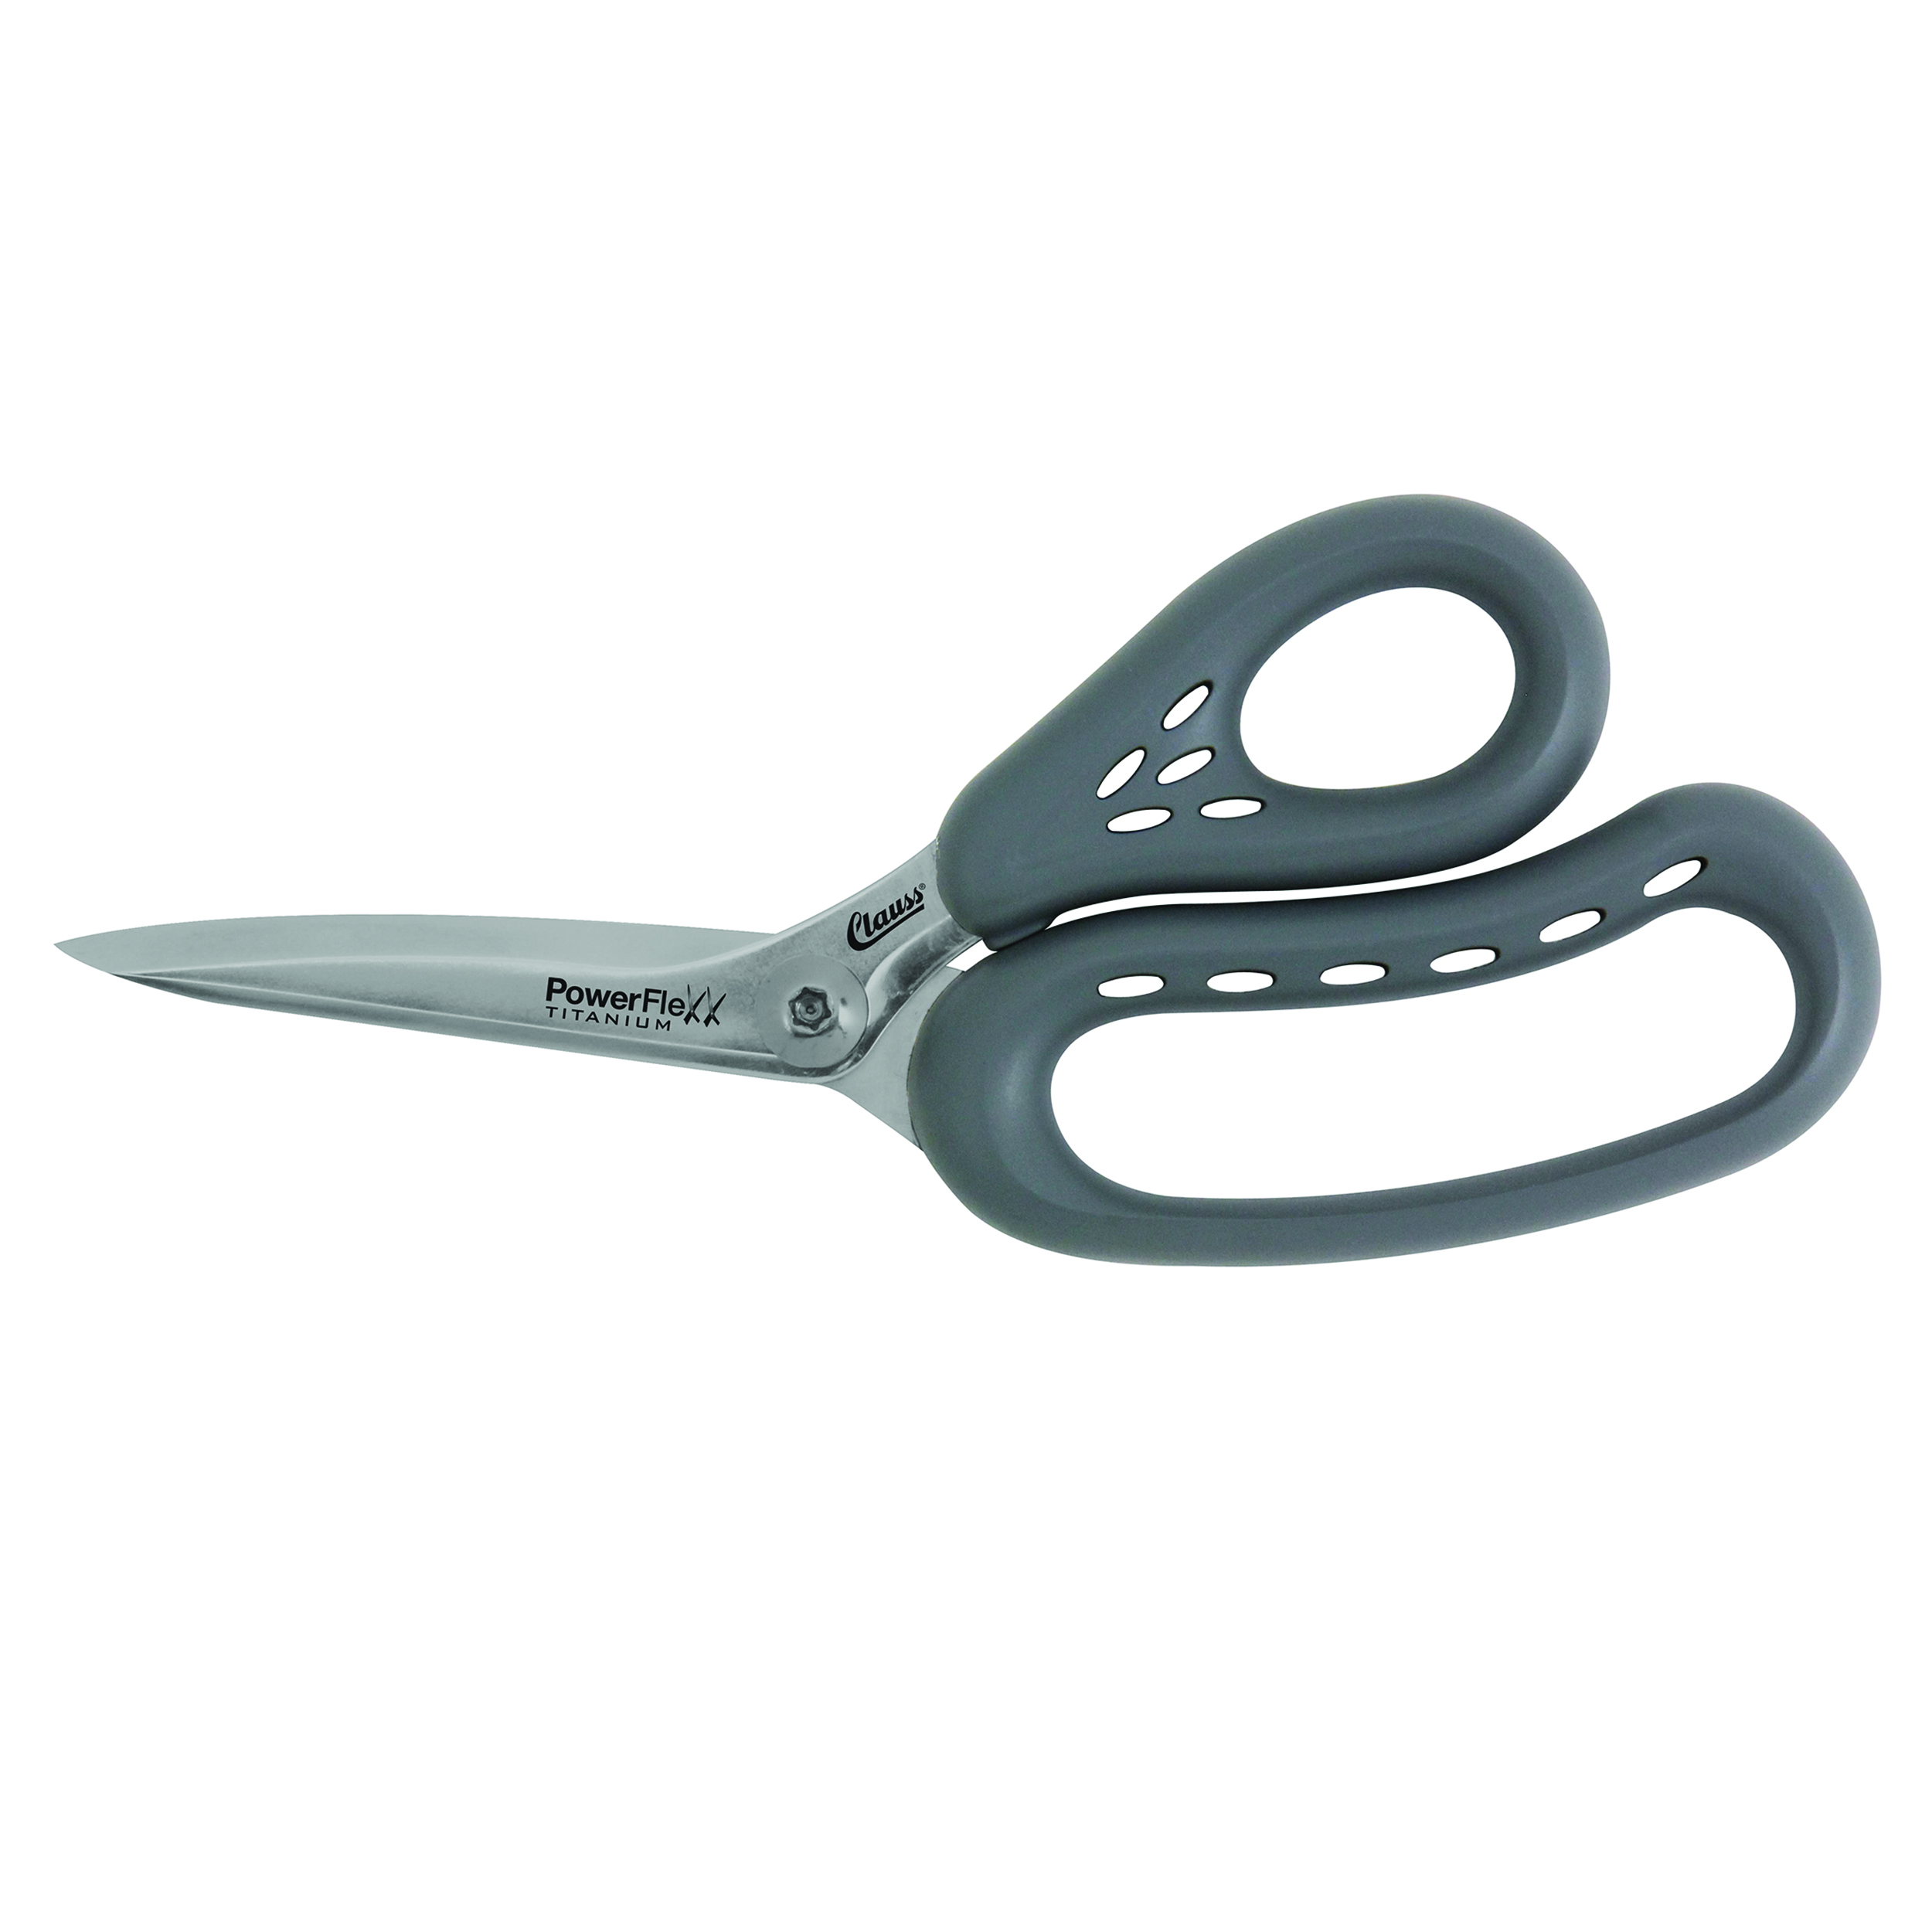 9" Powerflexx Titanium Shop Scissors With Ergonomic Grip